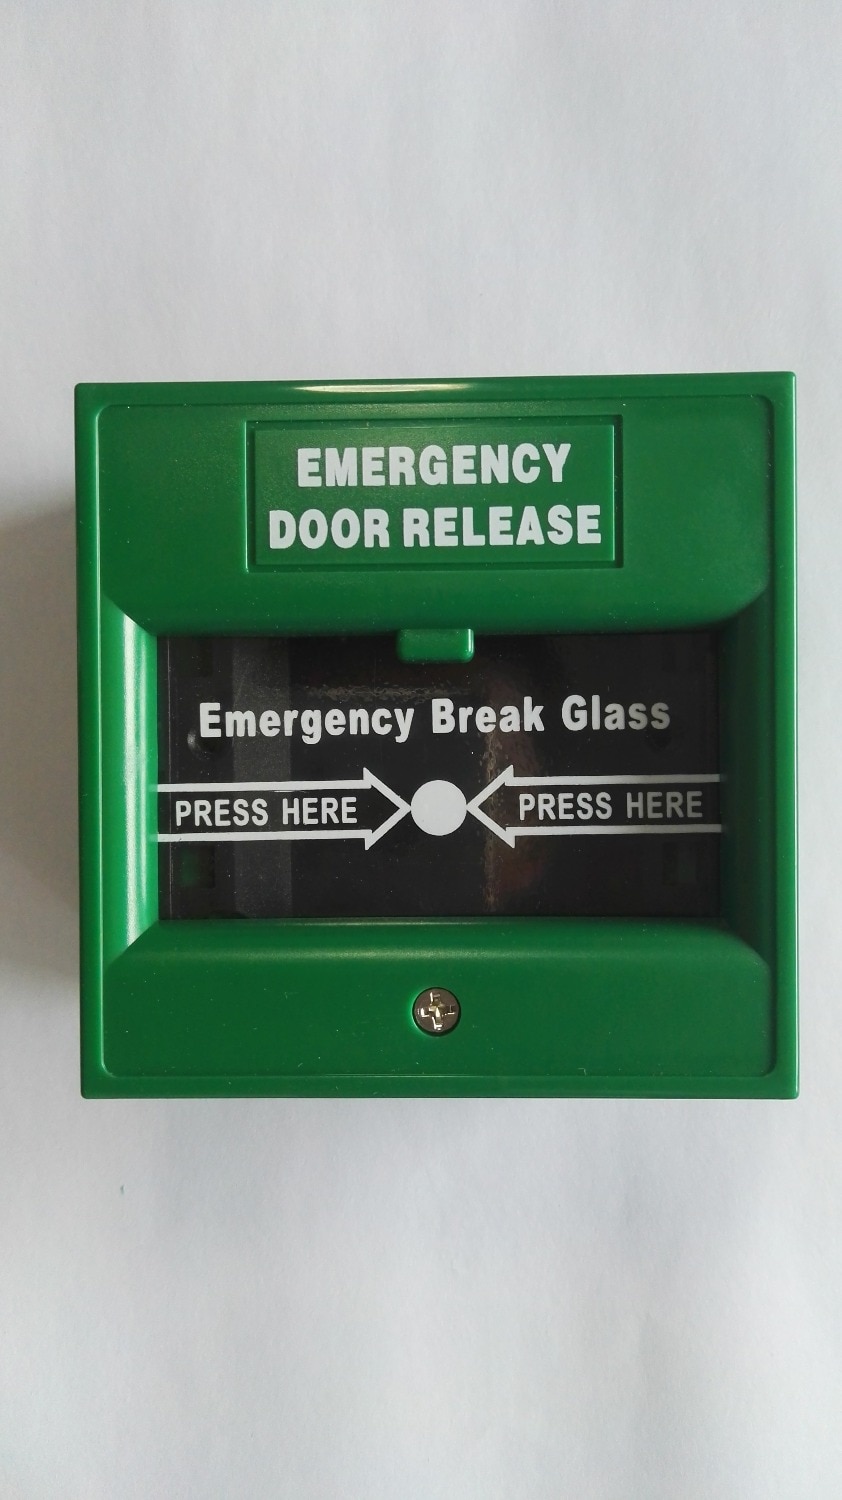 Break Glass Fire Emergency Exit Release call point, Single pole single through